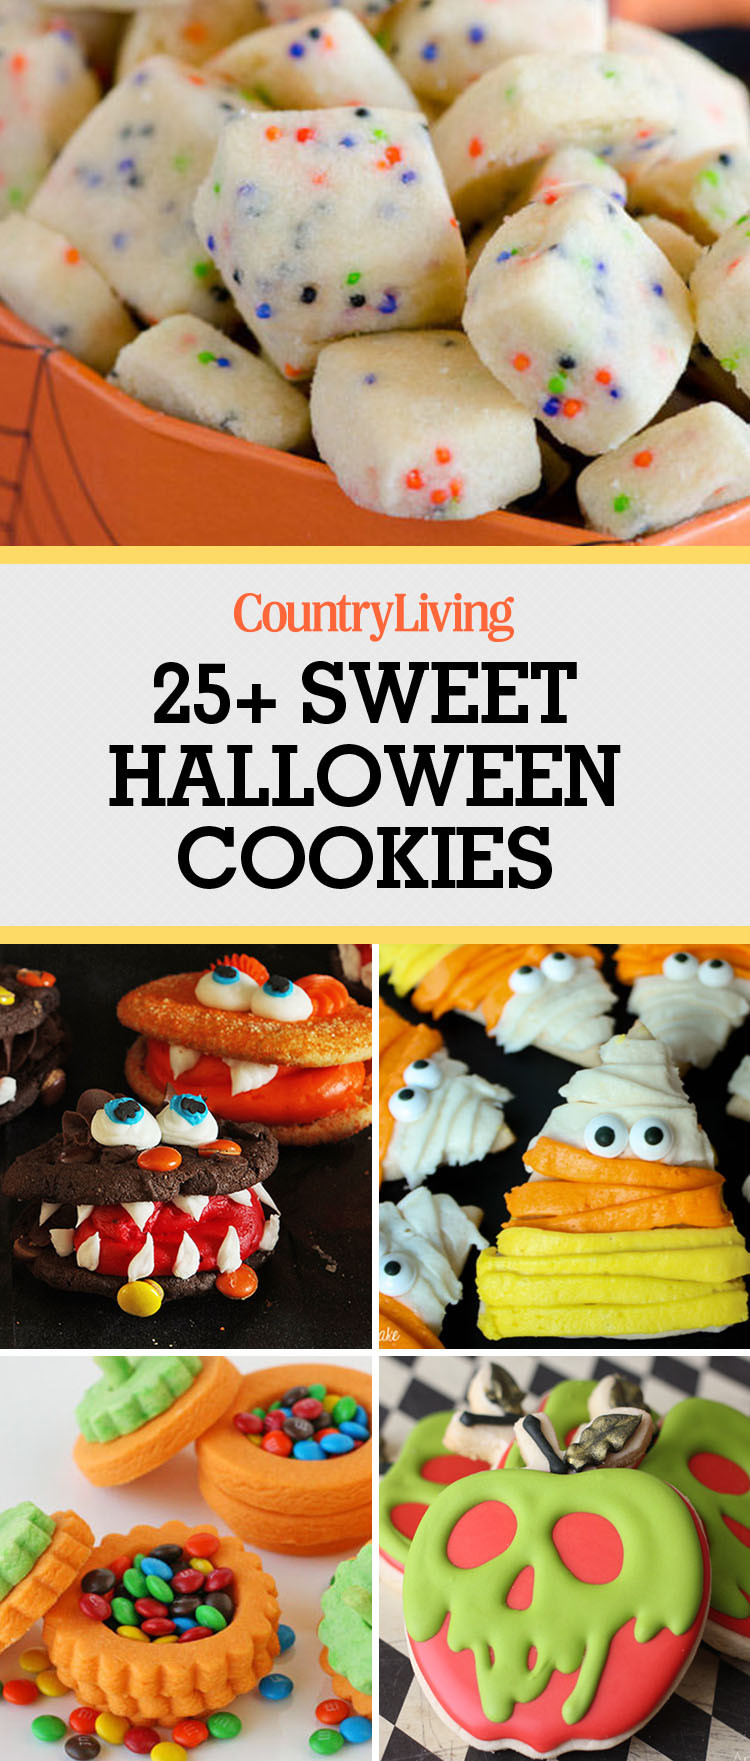 Pinterest Halloween Desserts
 31 Easy Halloween Cookies Recipes & Ideas for Cute